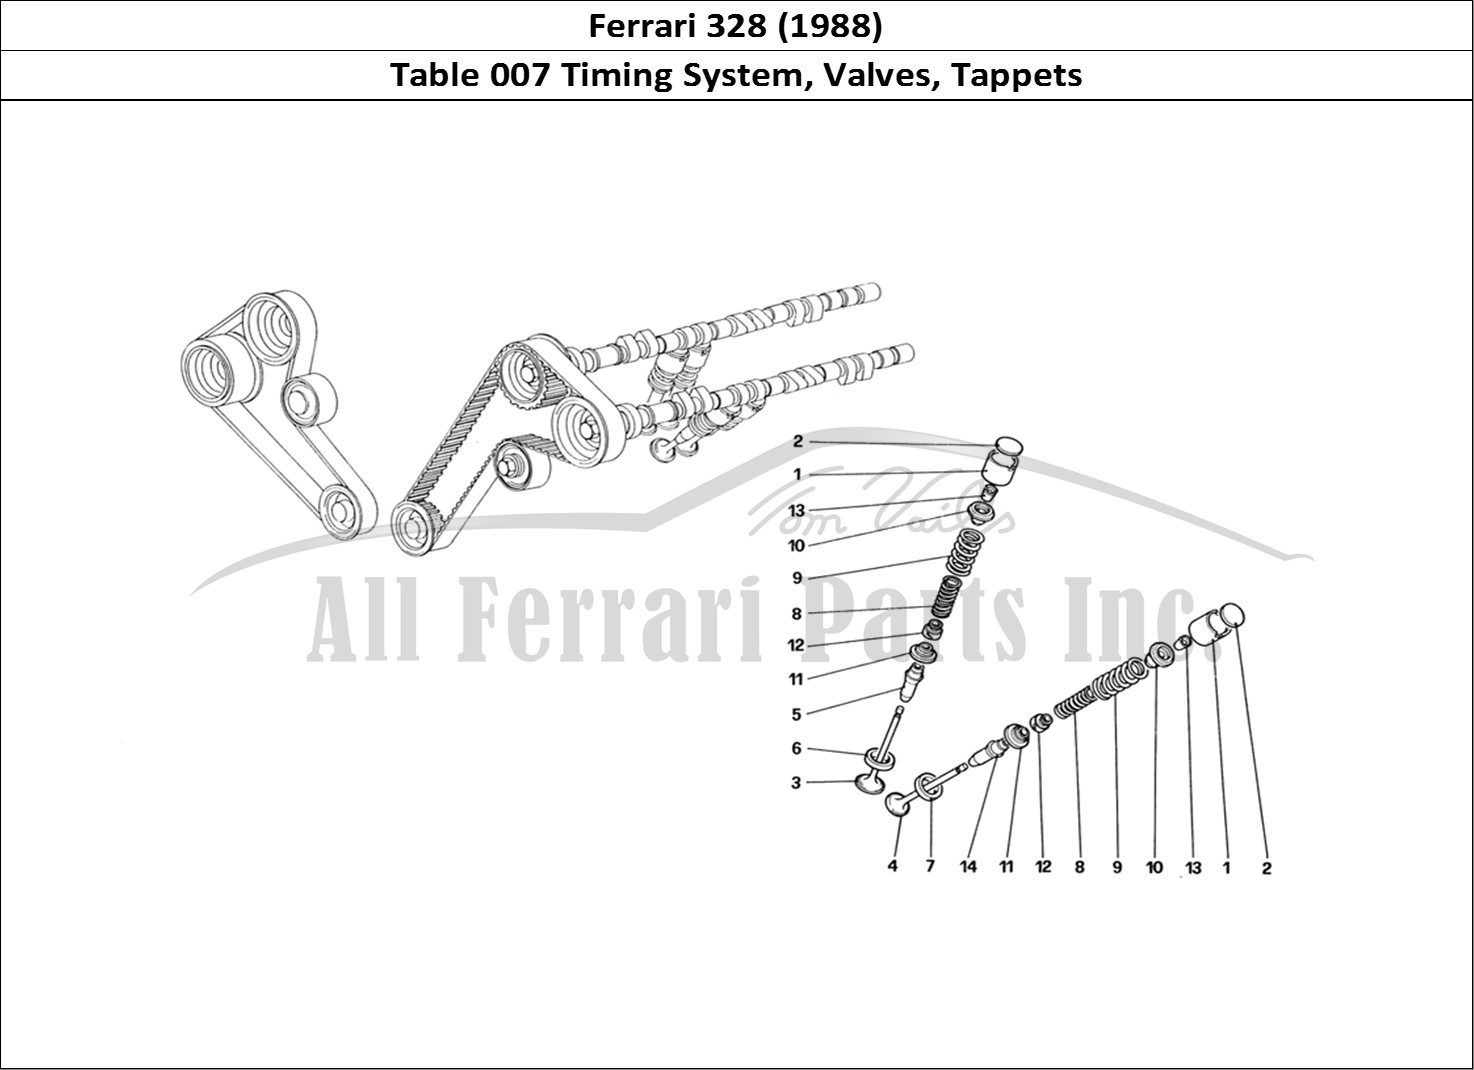 Ferrari Parts Ferrari 328 (1988) Page 007 Timing System - Tappets